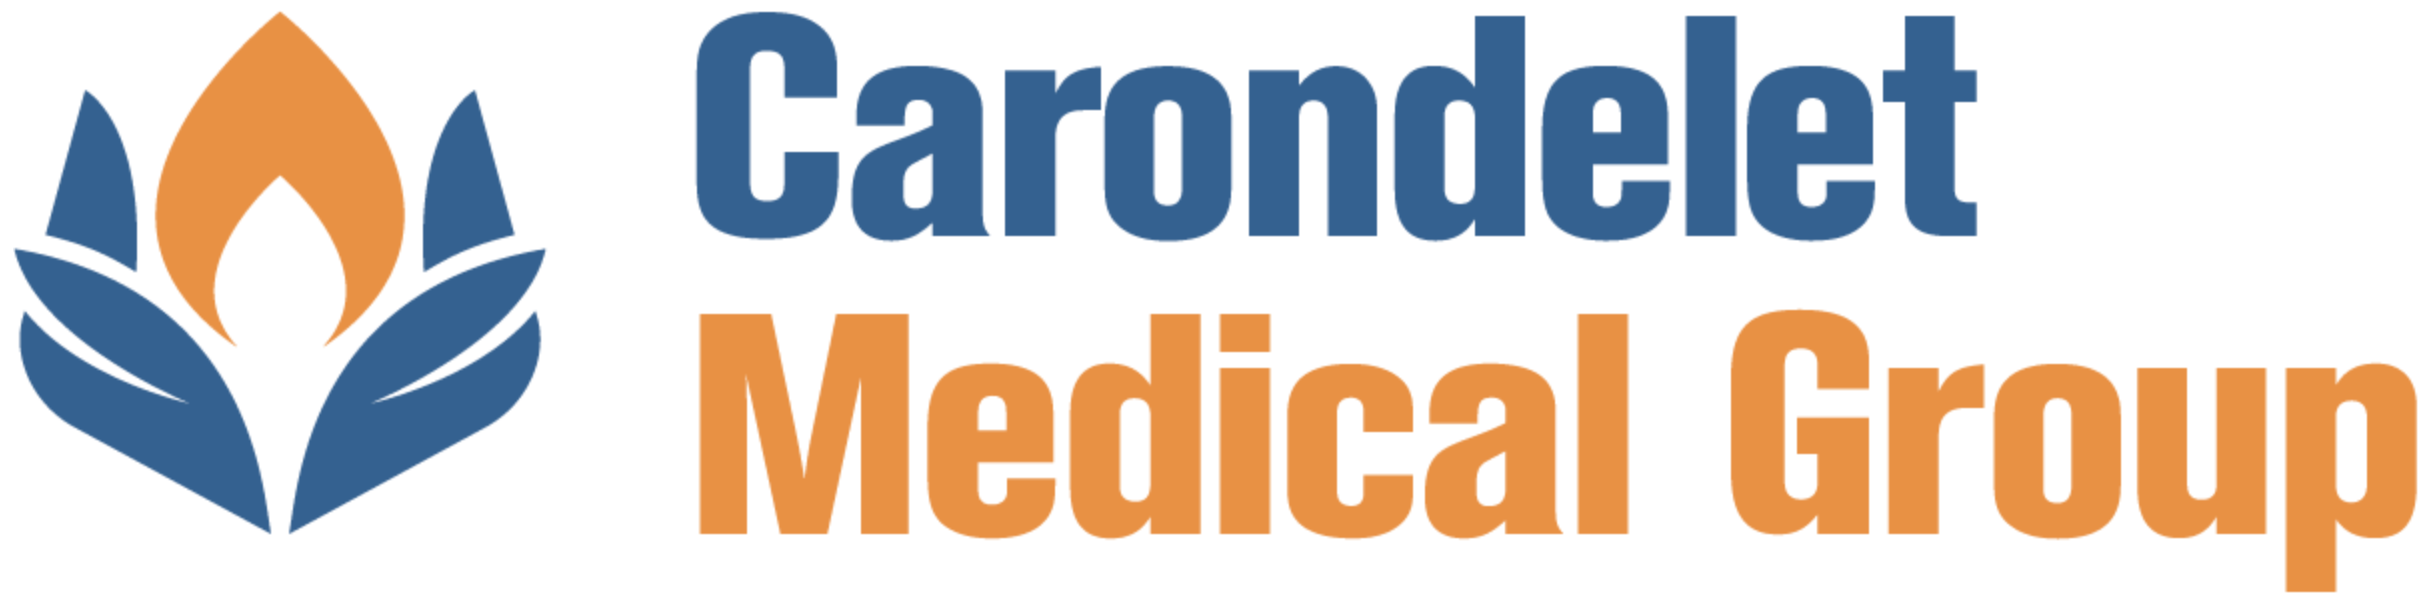 Carondelet Medical Group logo